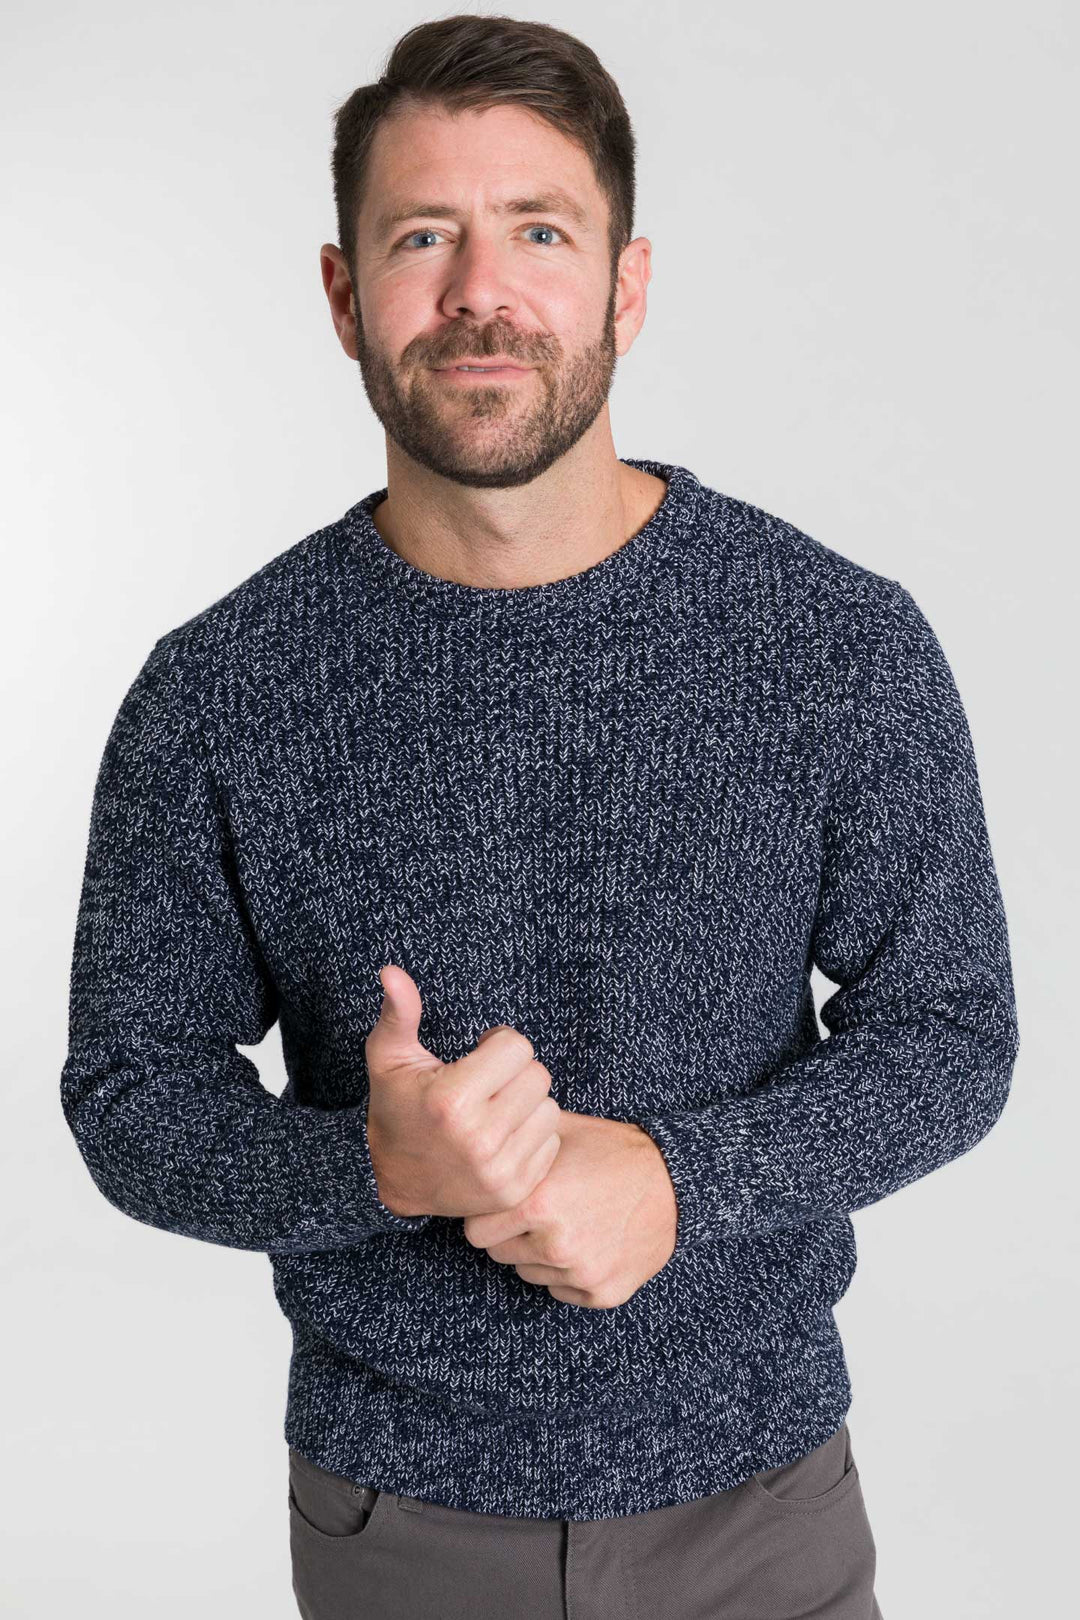 Buy Deep Navy Knit Sweater for Short Men | Ash & Erie   Sweater